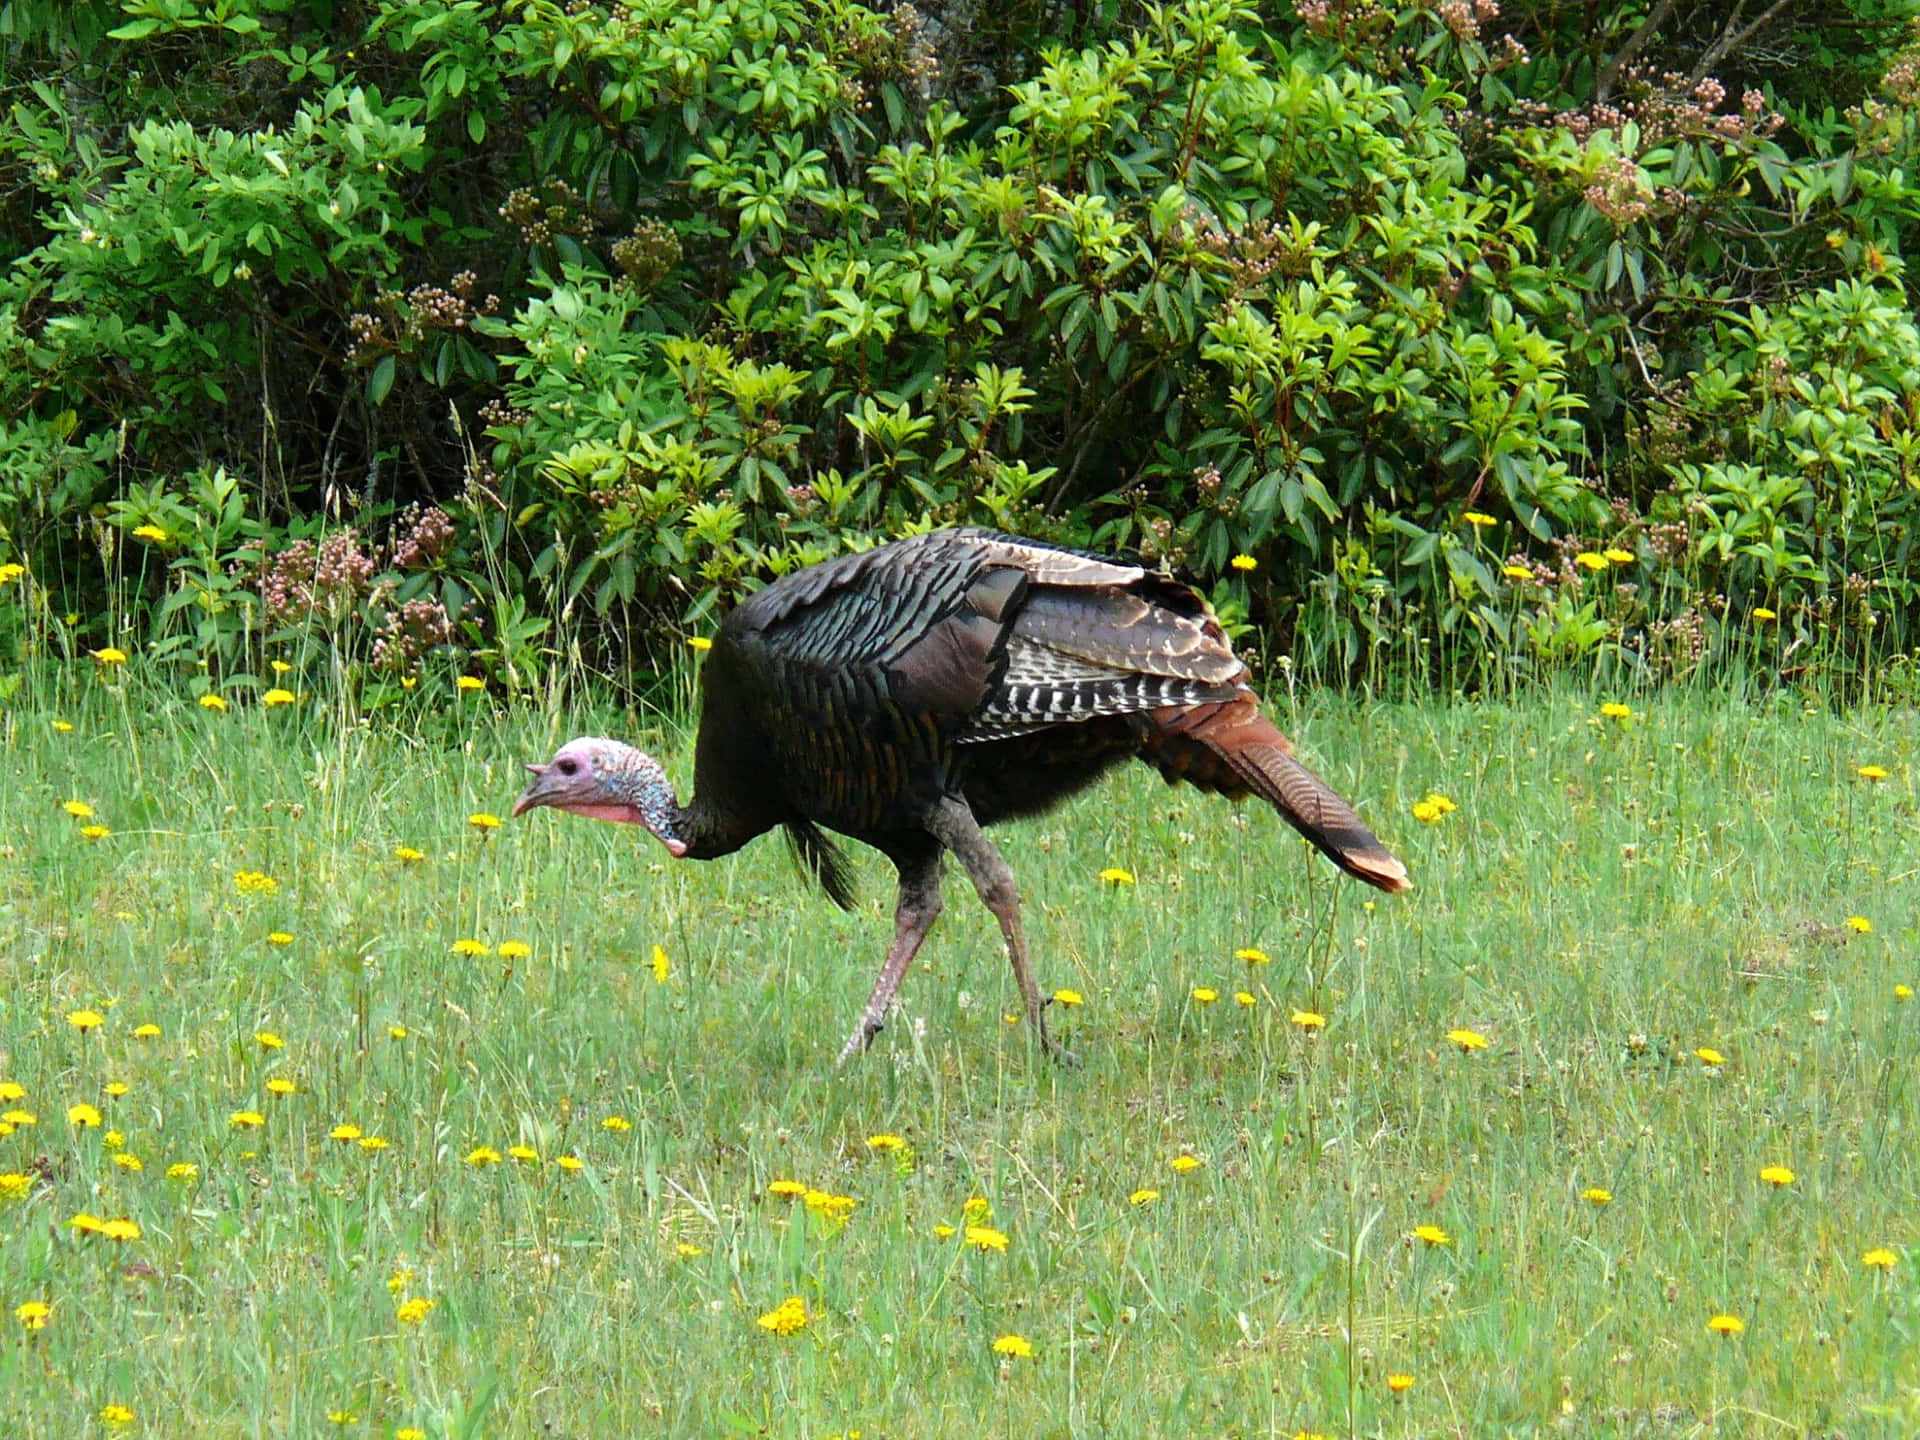 A Turkey Walking In The Grass